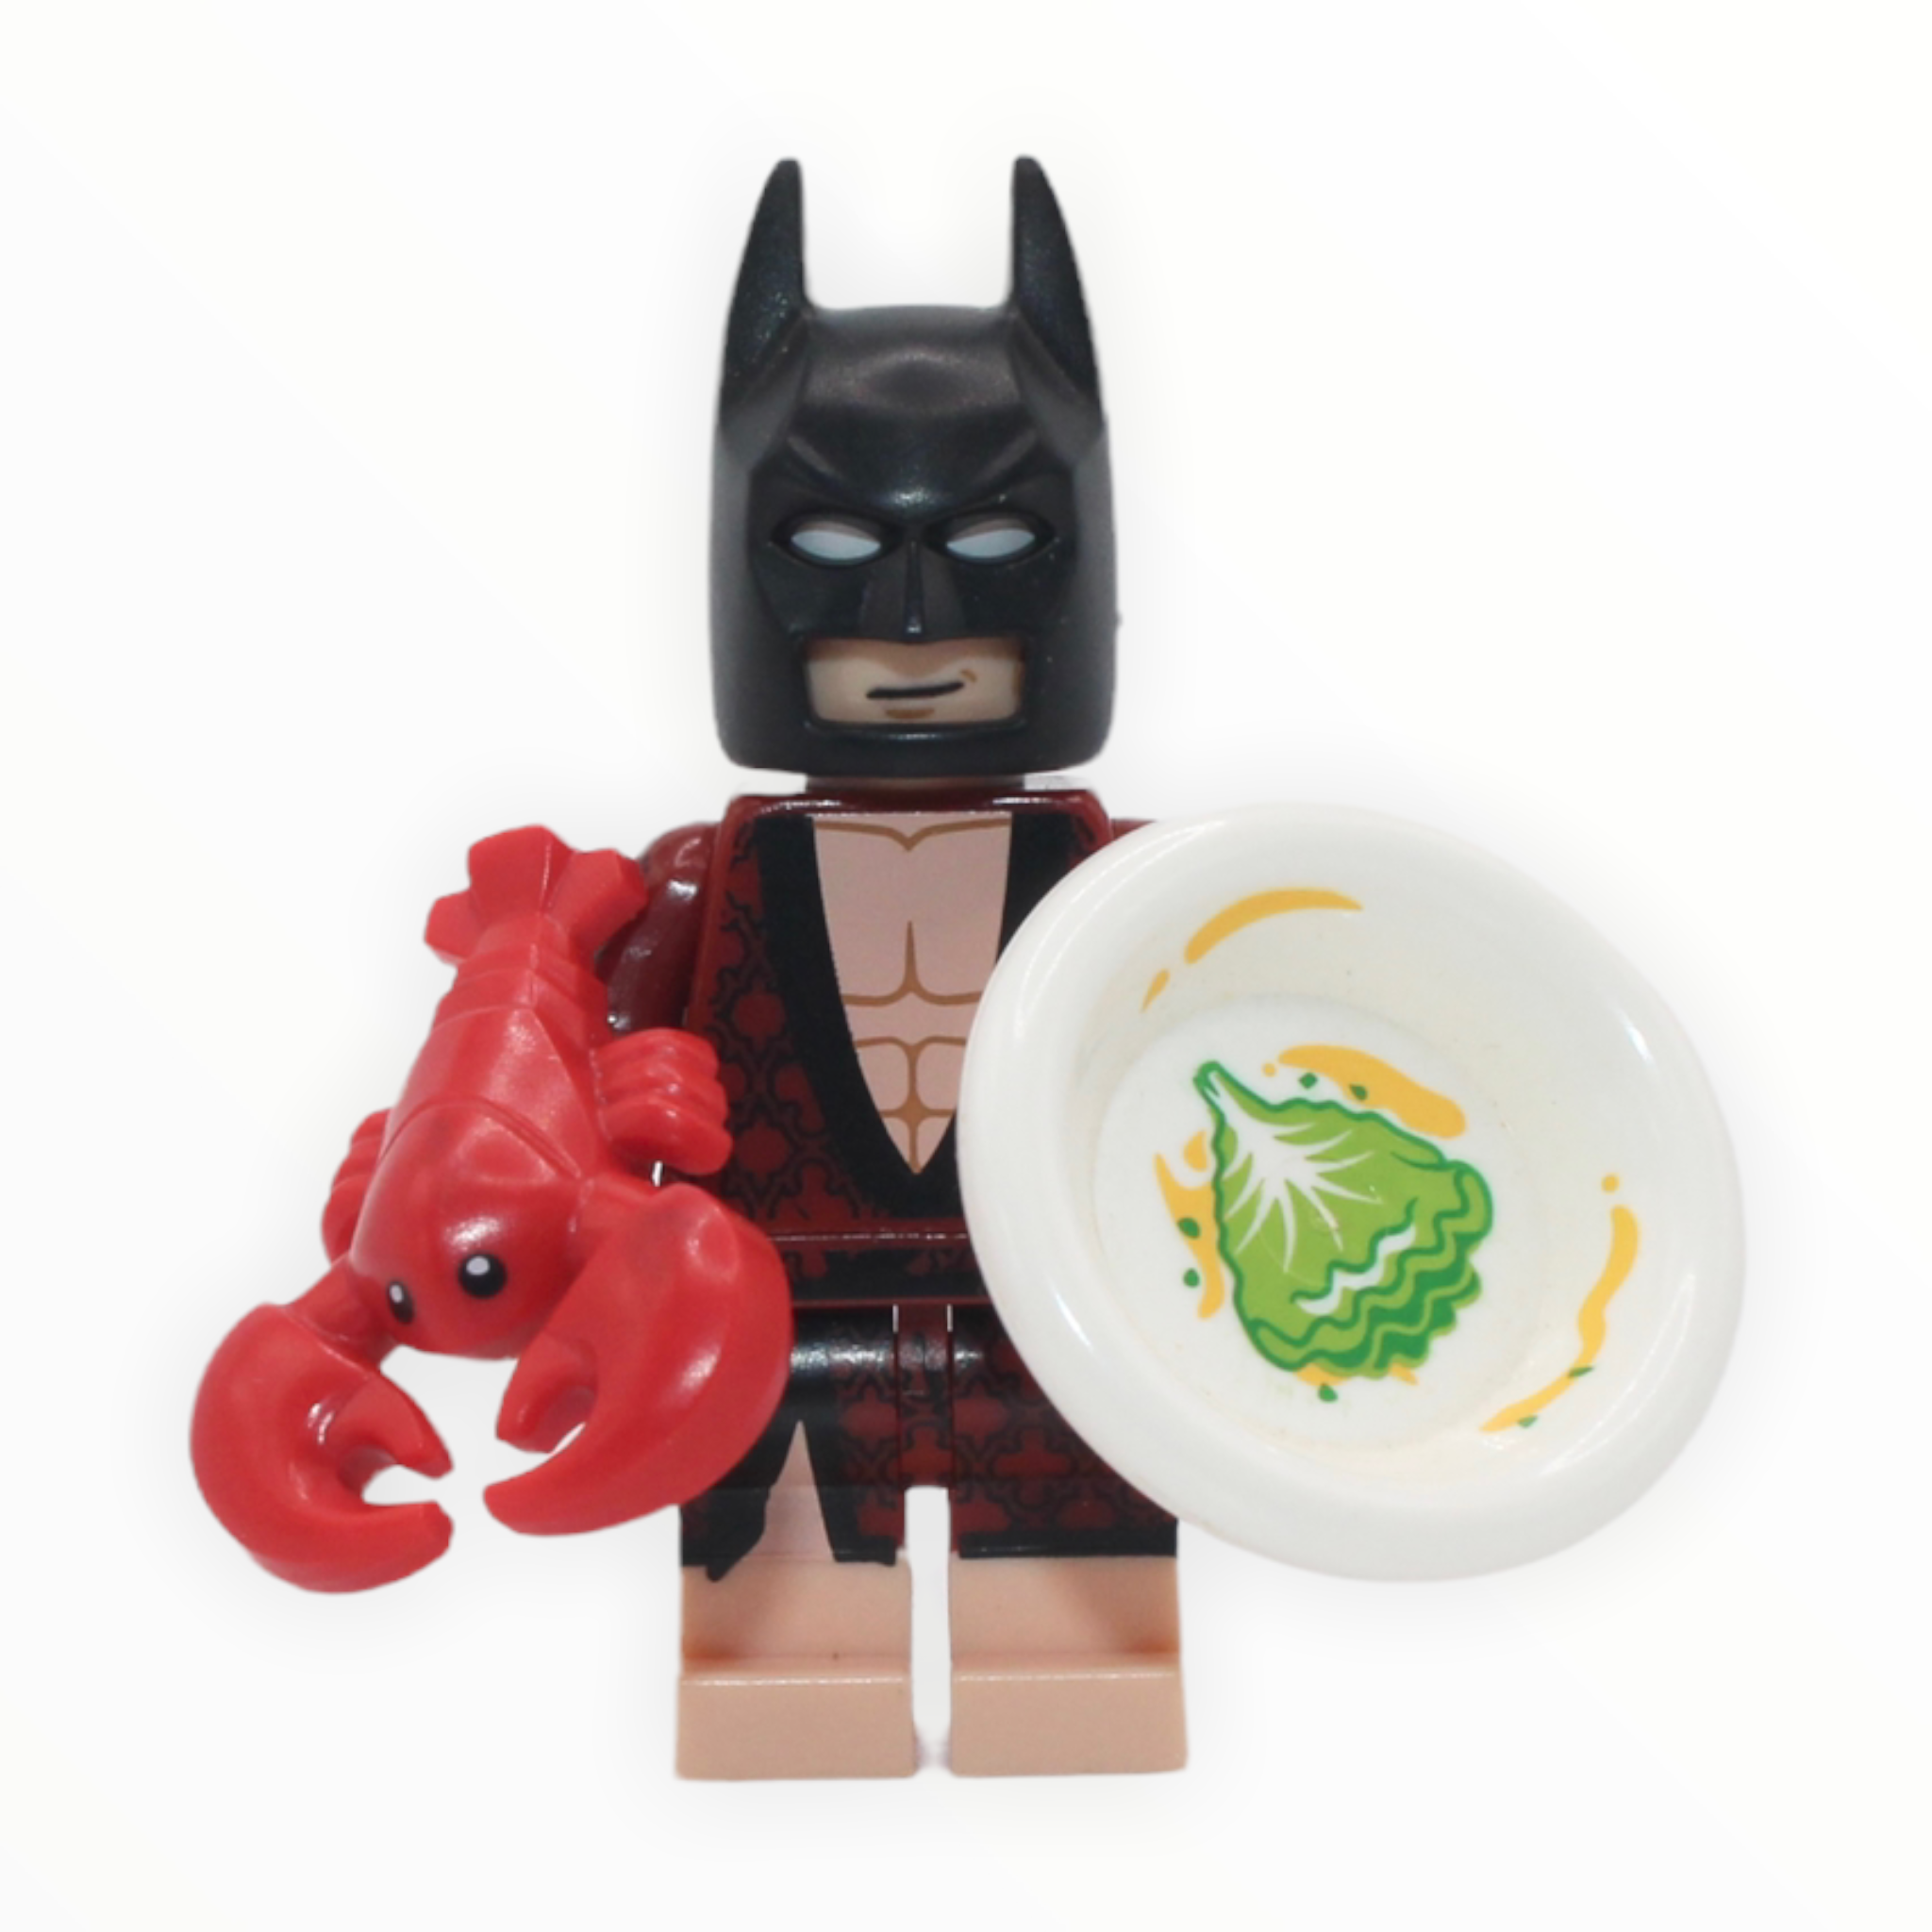 The LEGO Batman Movie Series 1: Lobster-Lovin’ Batman